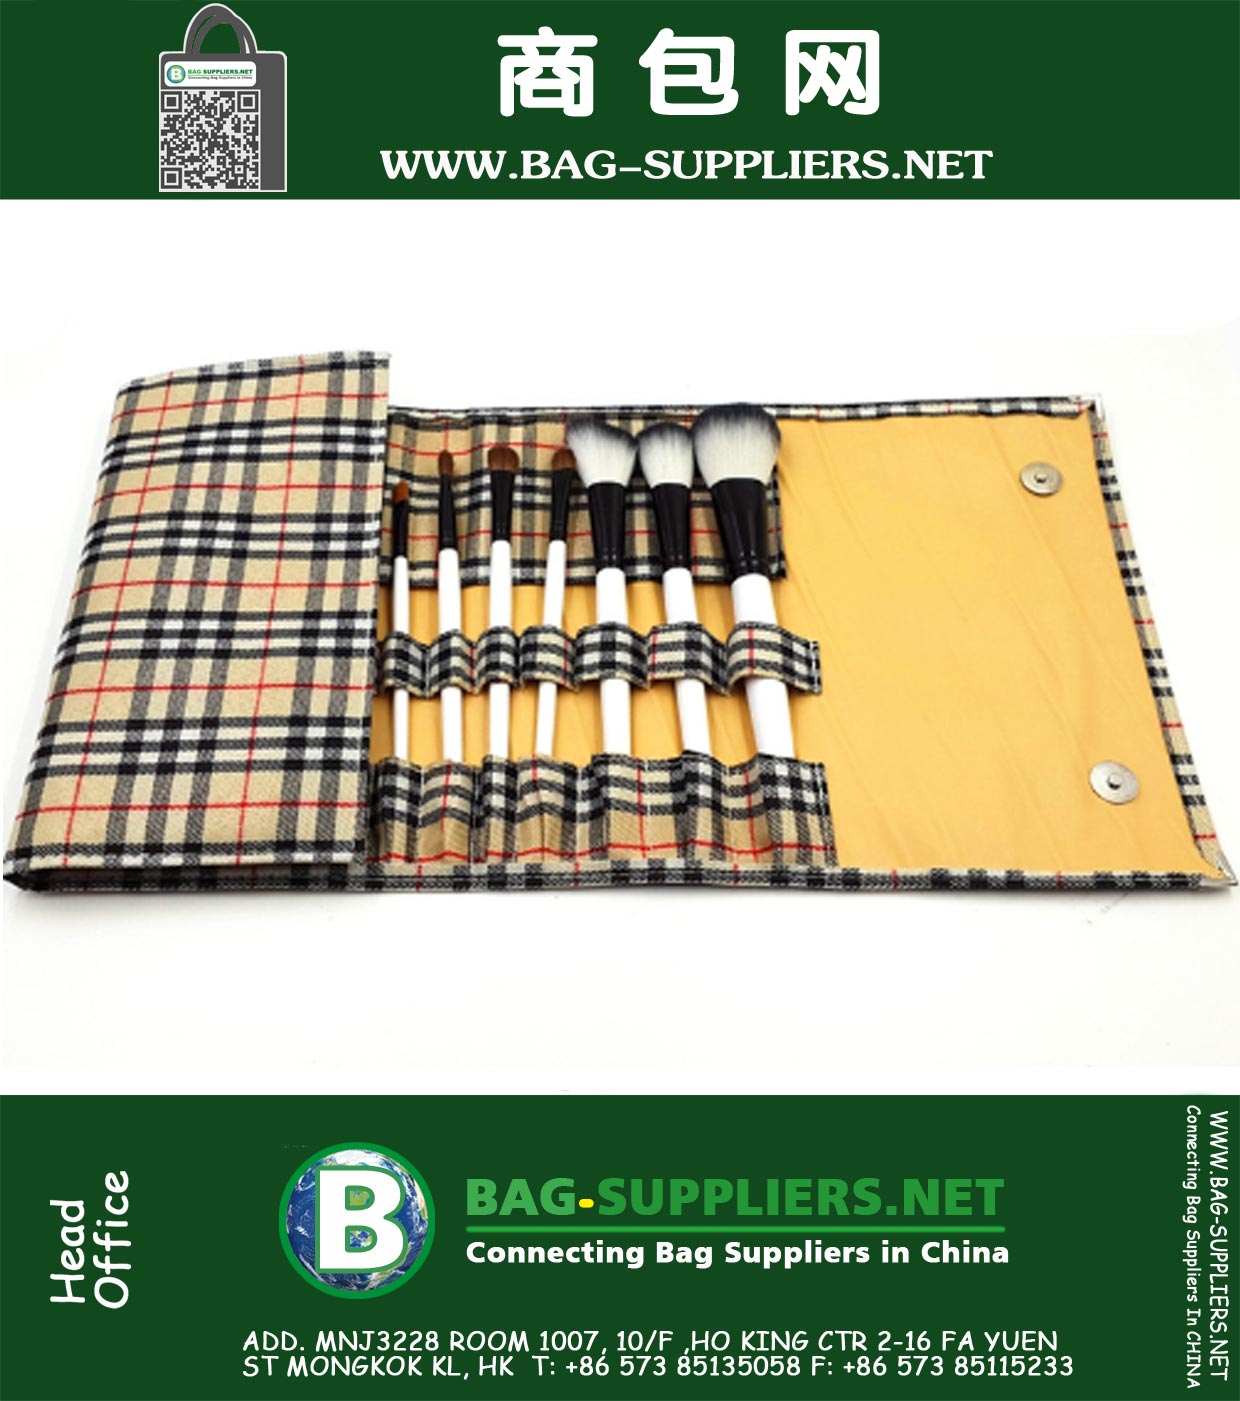 Professional 20 Pcs Makeup Brush Set Tools Make-up Portable Versatile Cosmetic Brushes Kit Make Up with Grid Stripe Khaki Bag